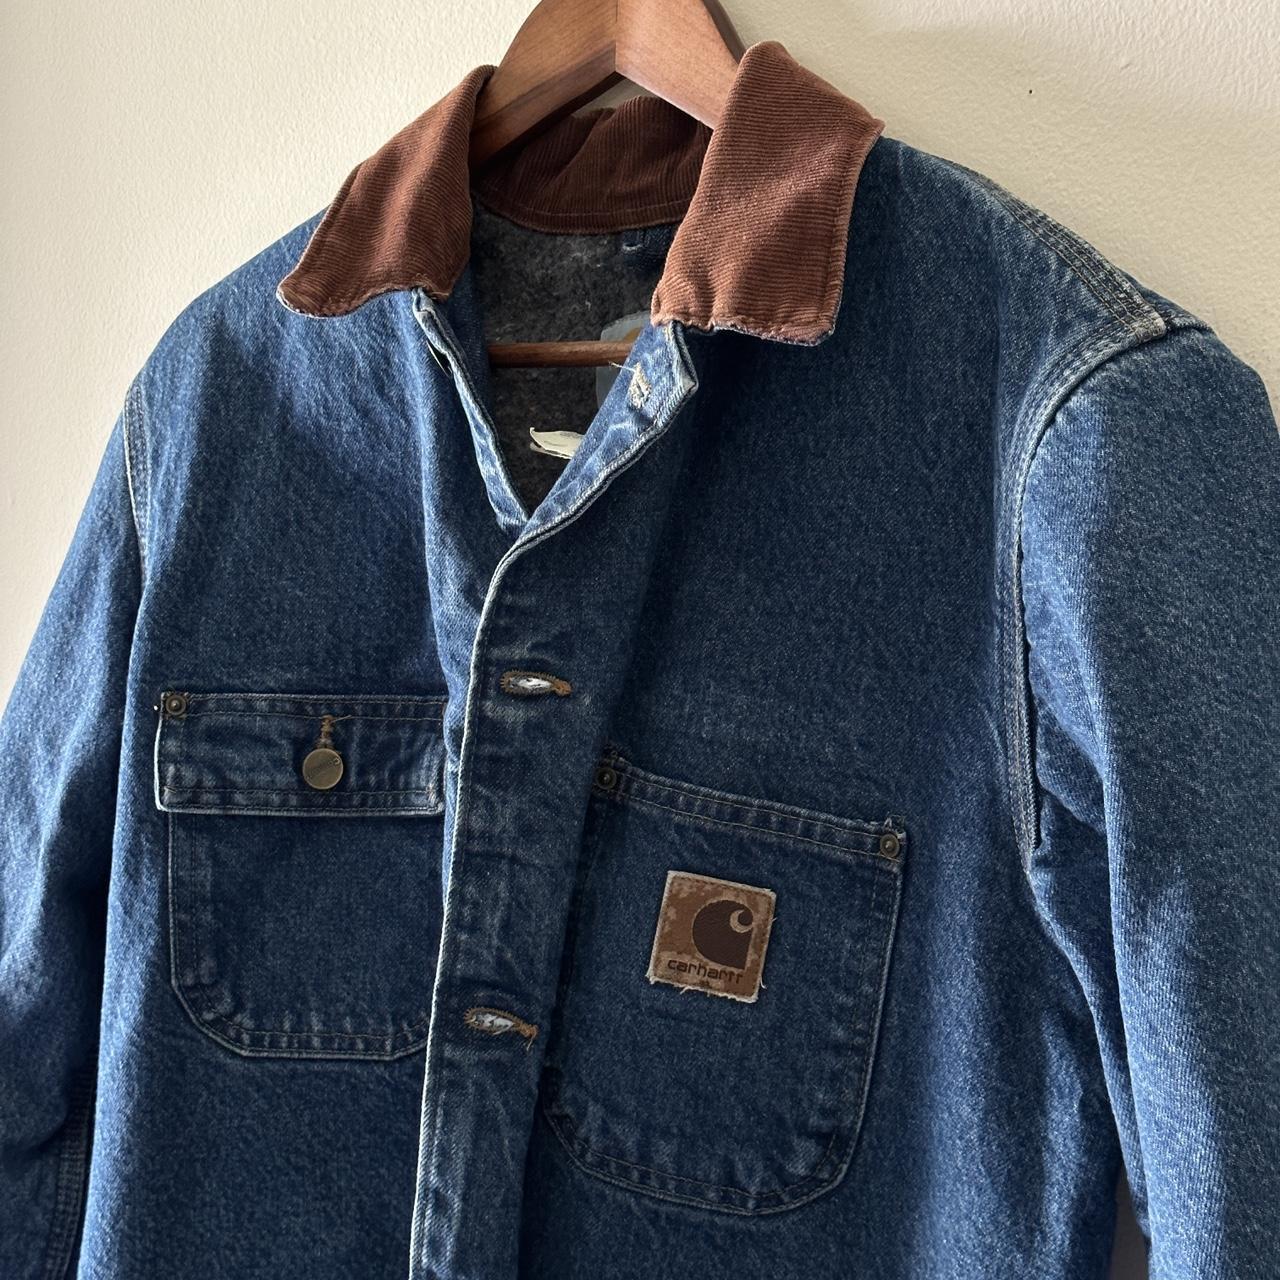 Carhartt Faded Denim Zip Jacket - 5 Star Vintage